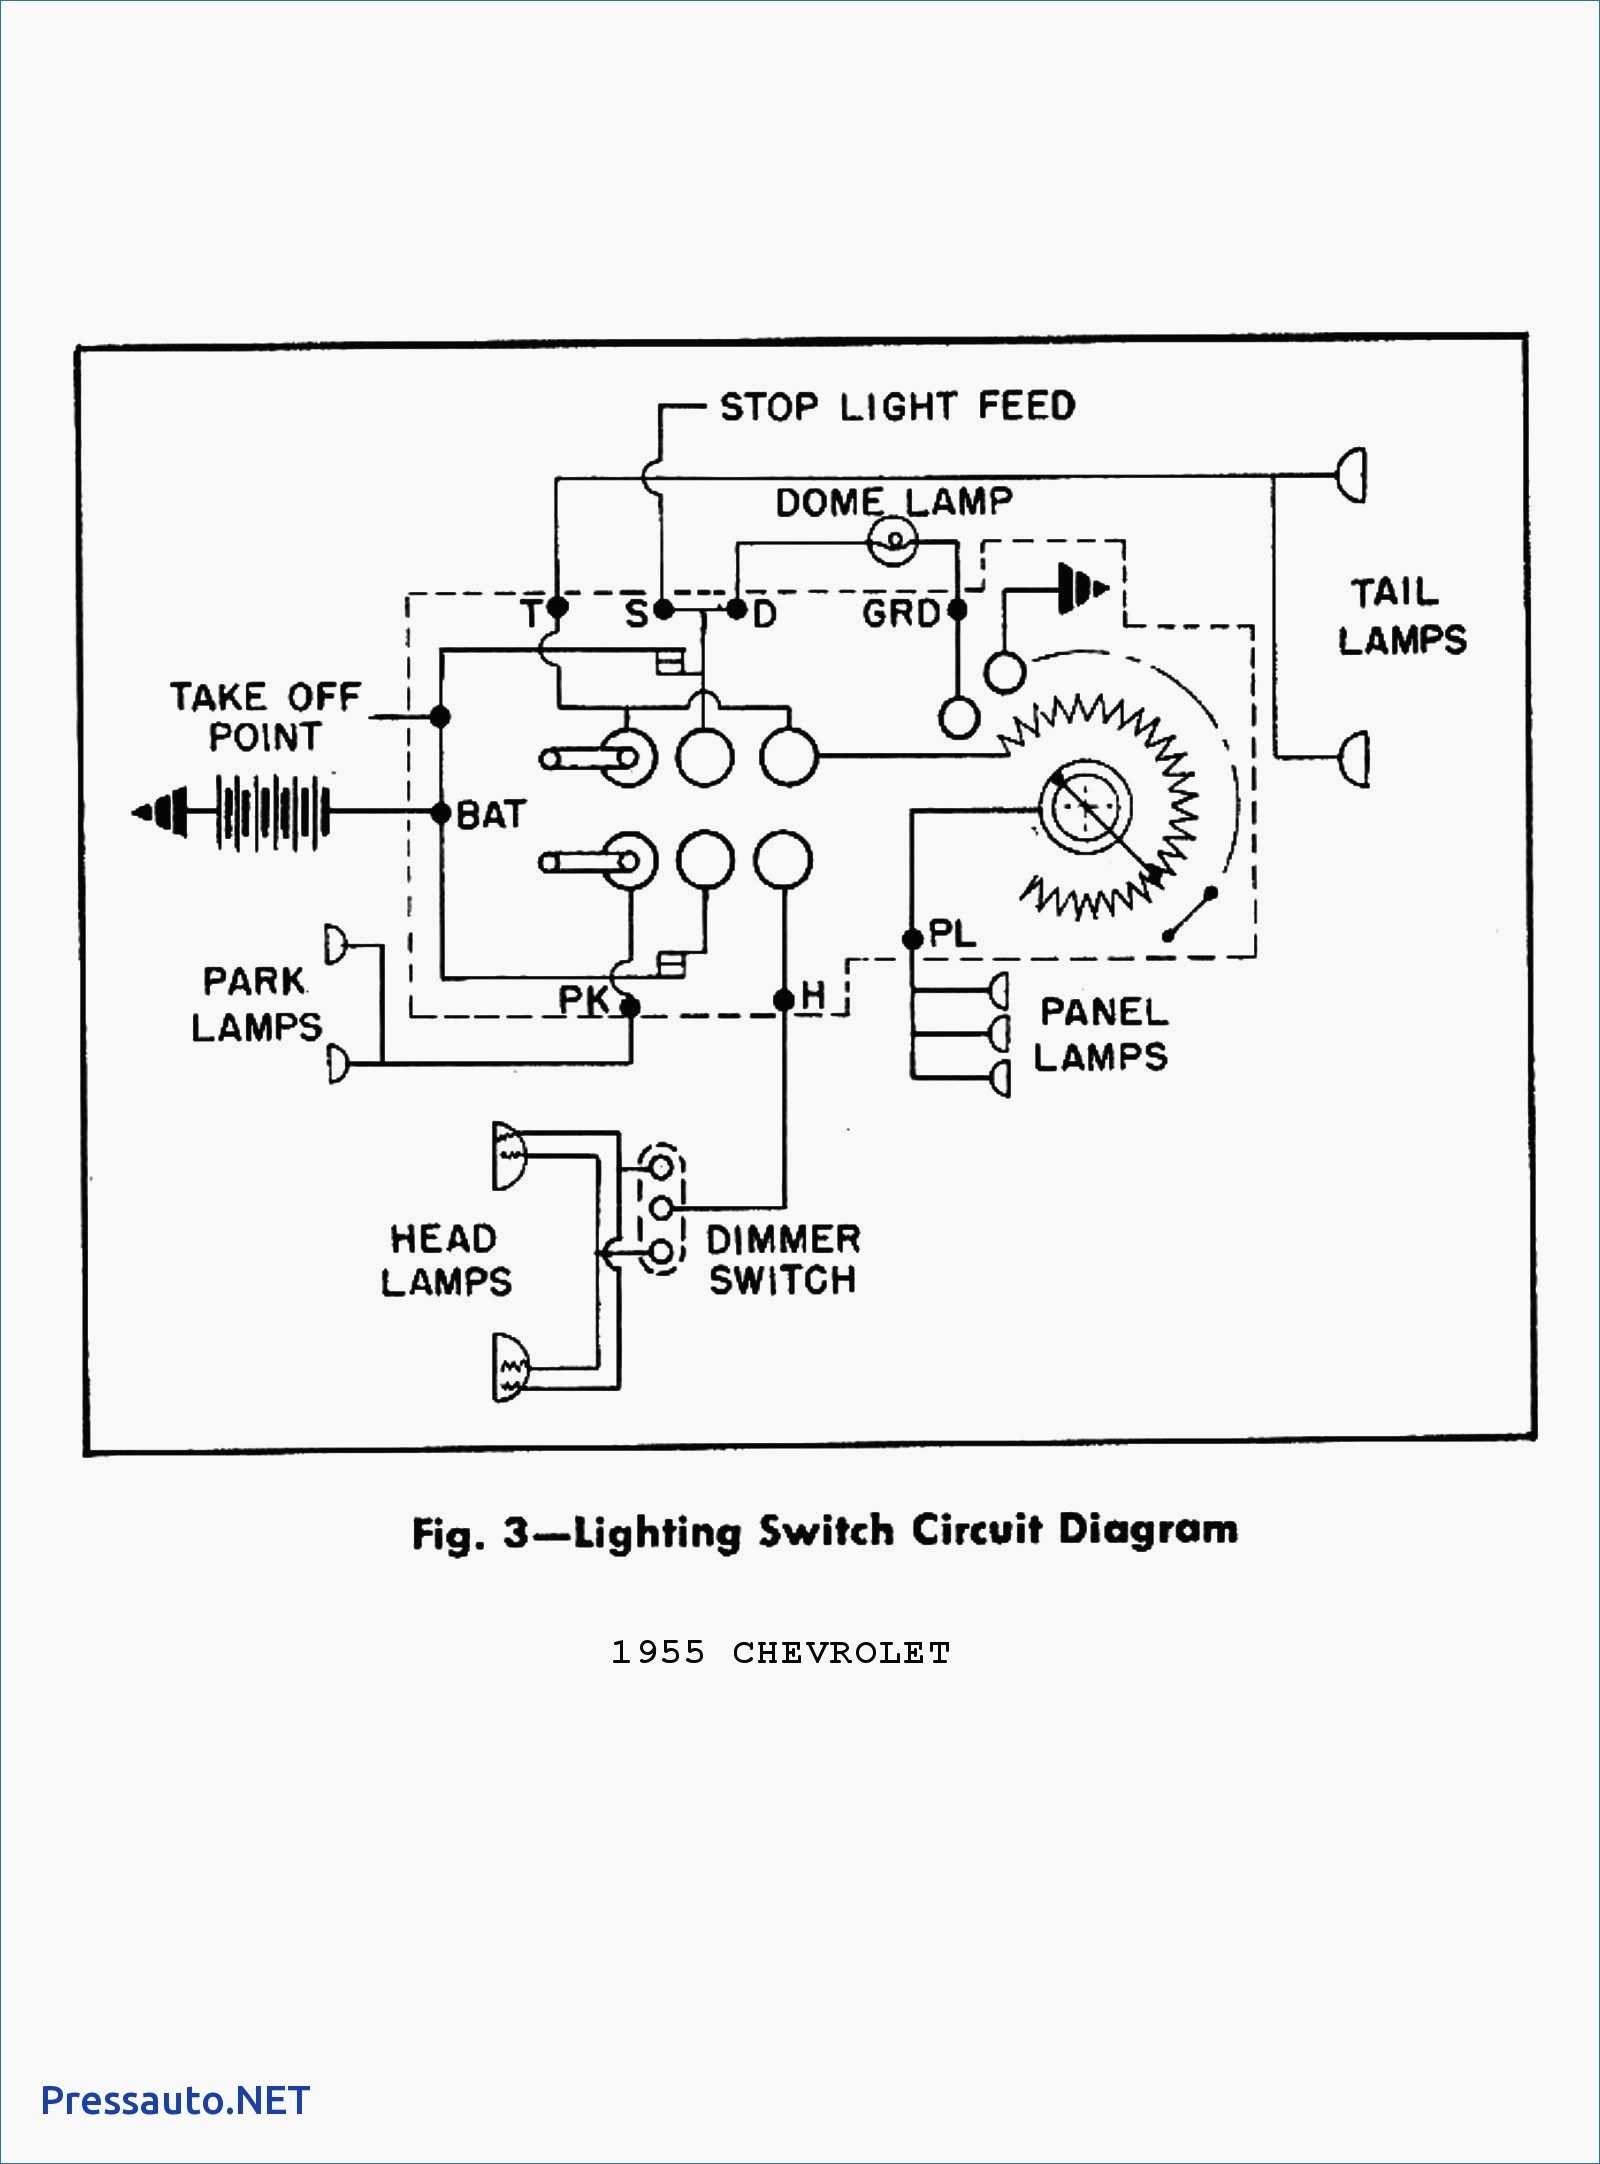 Wiring Diagram Semi Trailer Lights Save 7 Way Wiring Diagram For Trailer Lights Semi Plug Best In